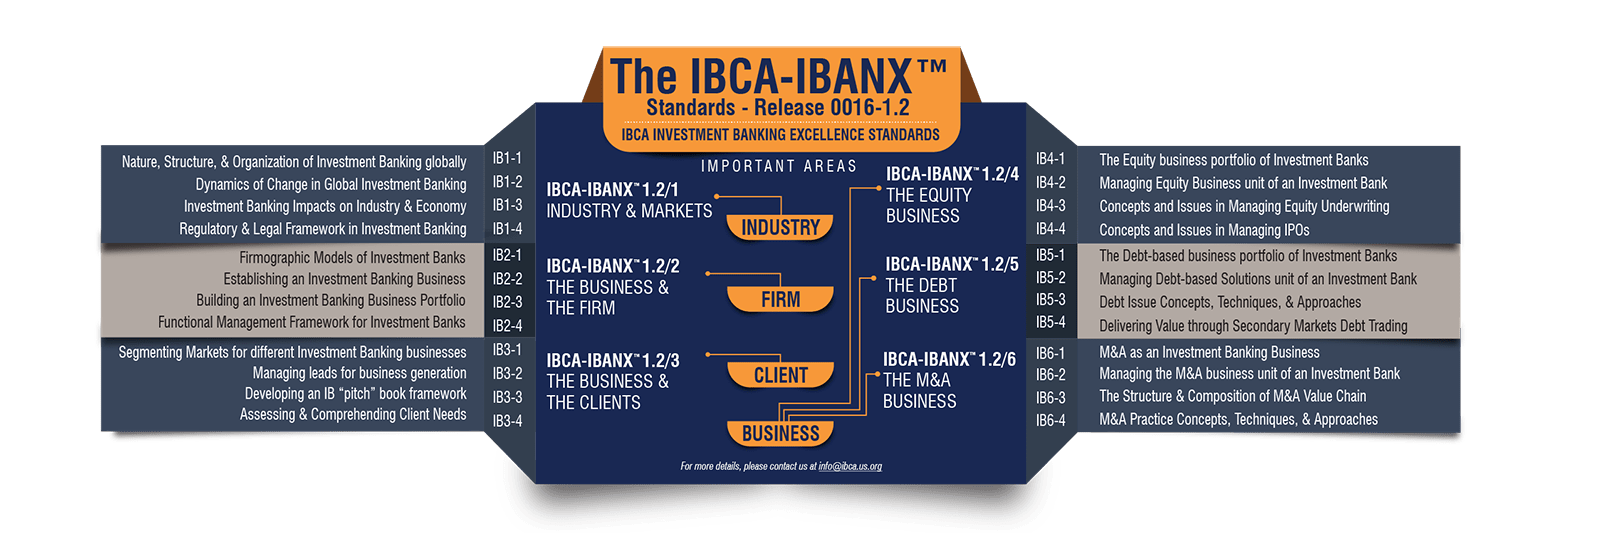 The IBCA-IBANX™